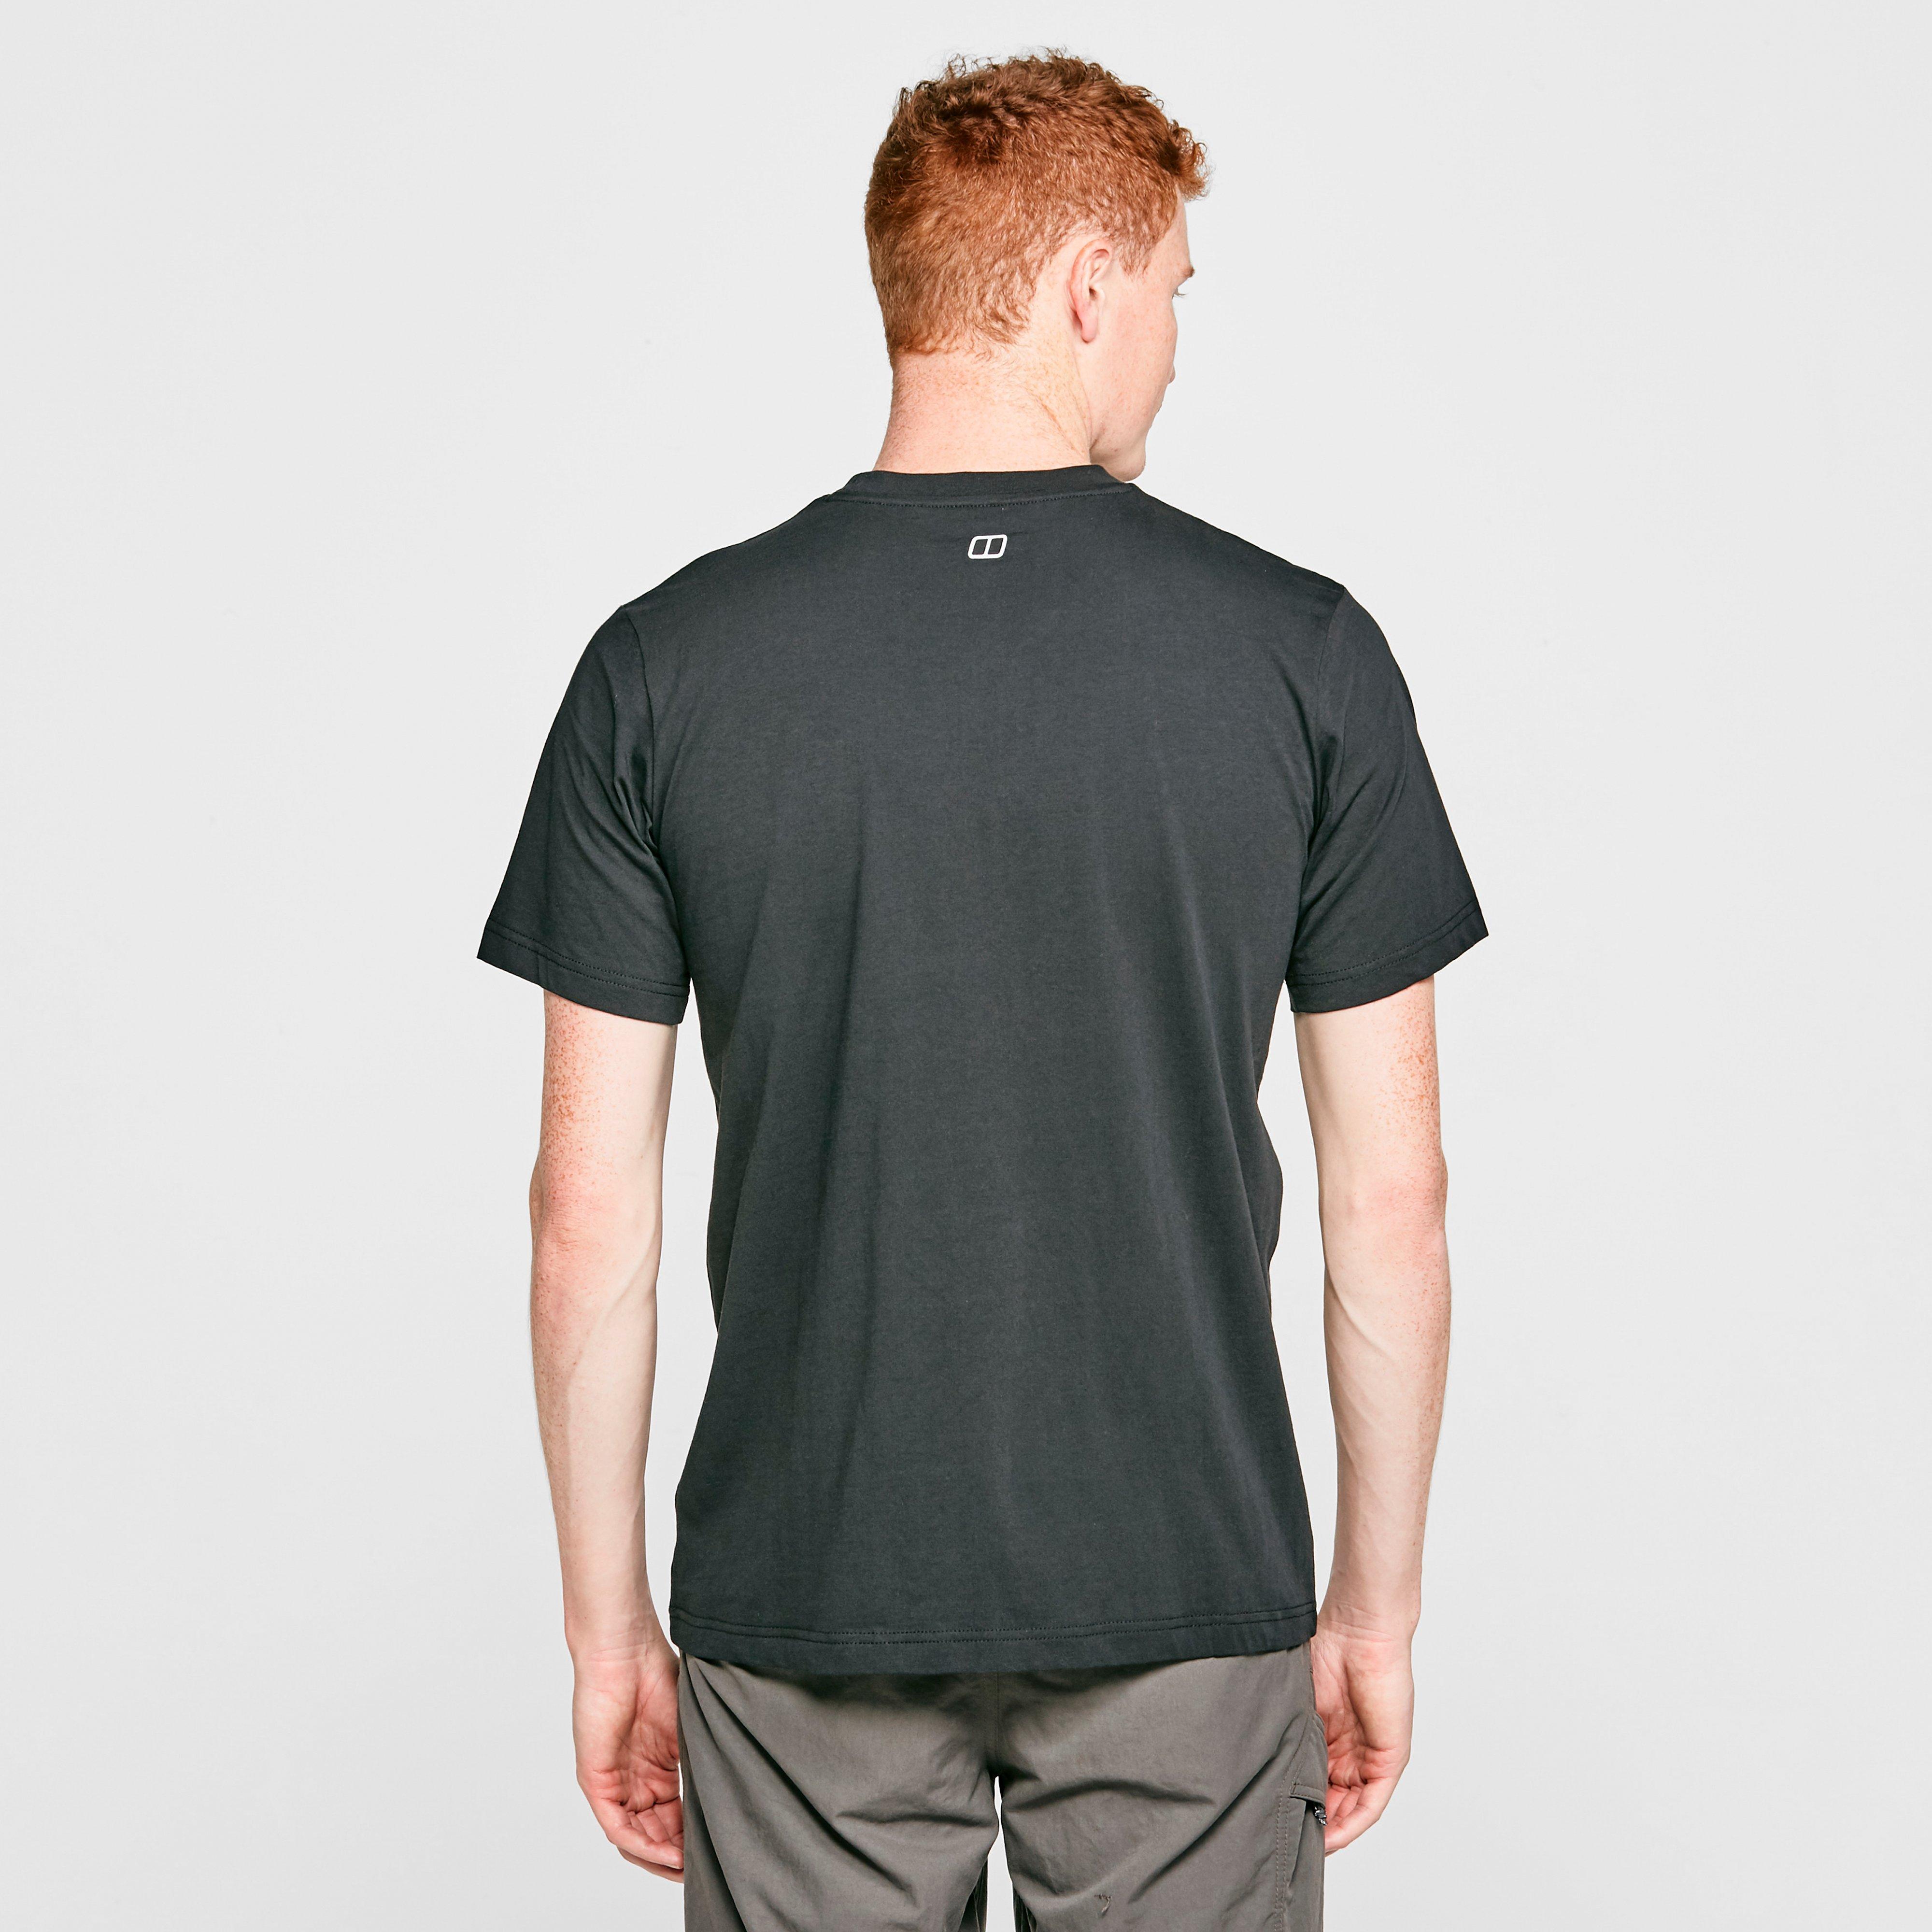 Berghaus Men's Abstract Mountain T-Shirt Review